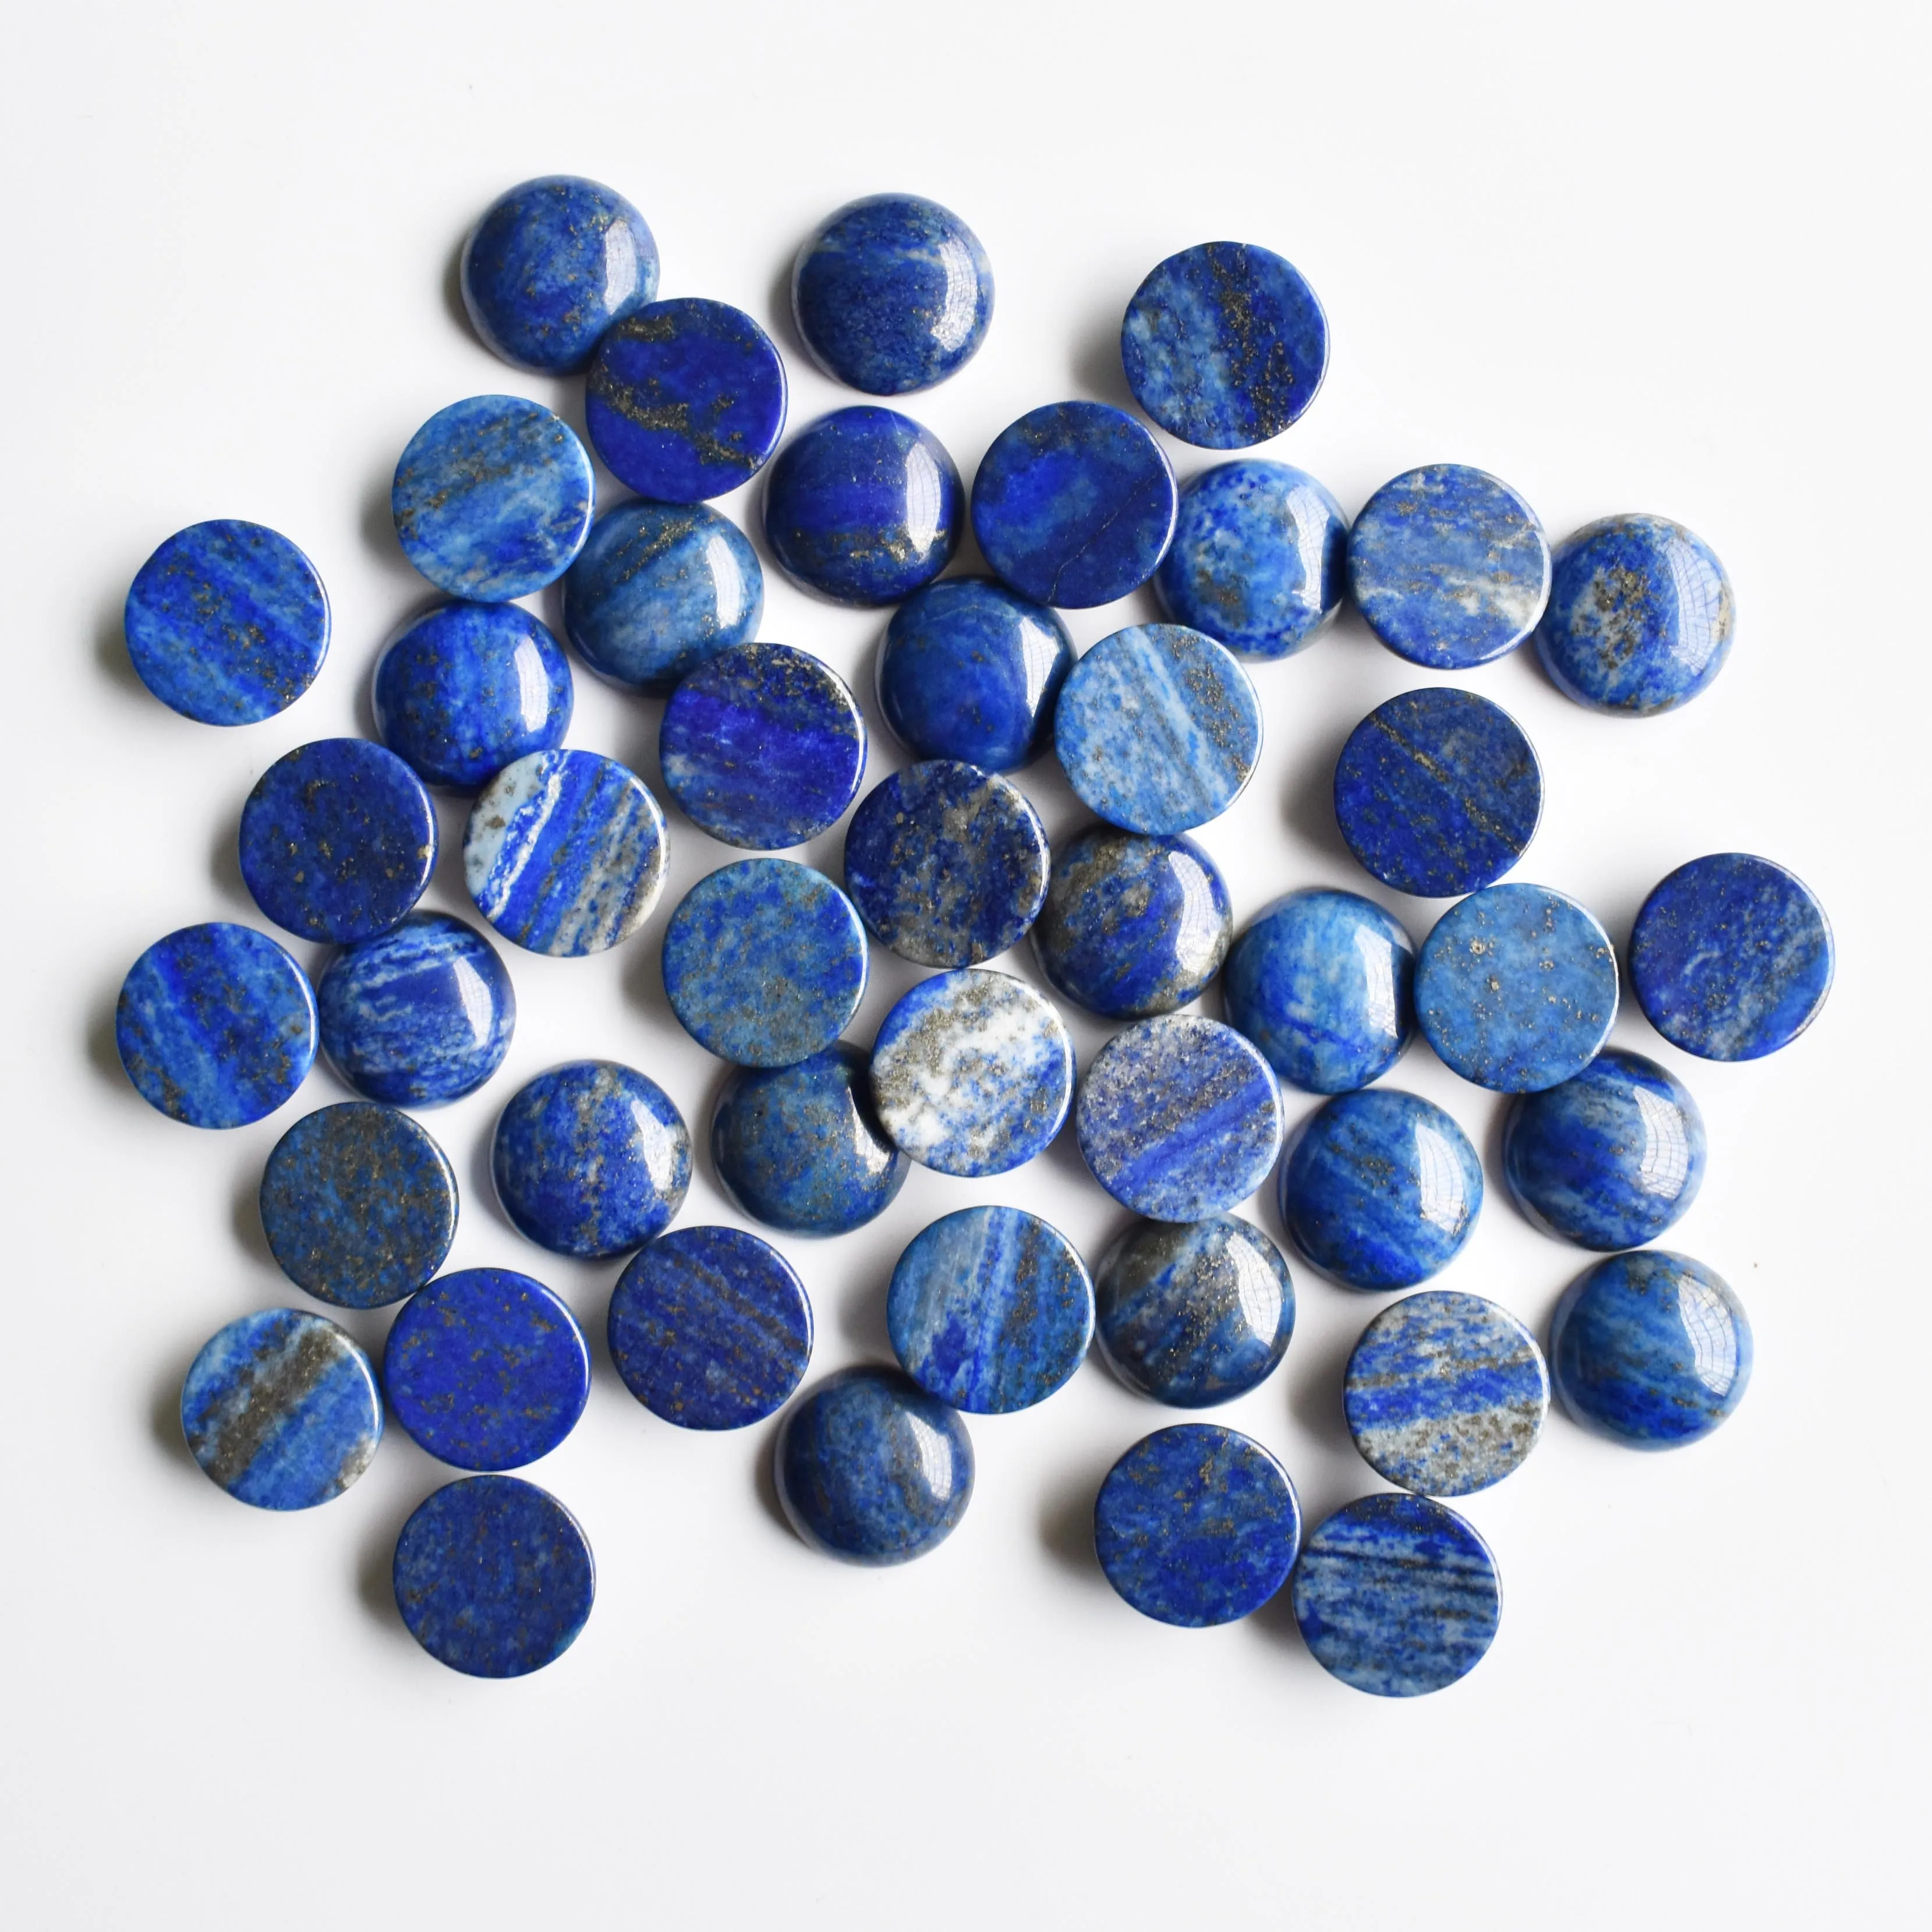 

Wholesale 30pcs/lot good quality natural lapis lazuli round shape cabochon 16mm beads for jewelry making free shipping